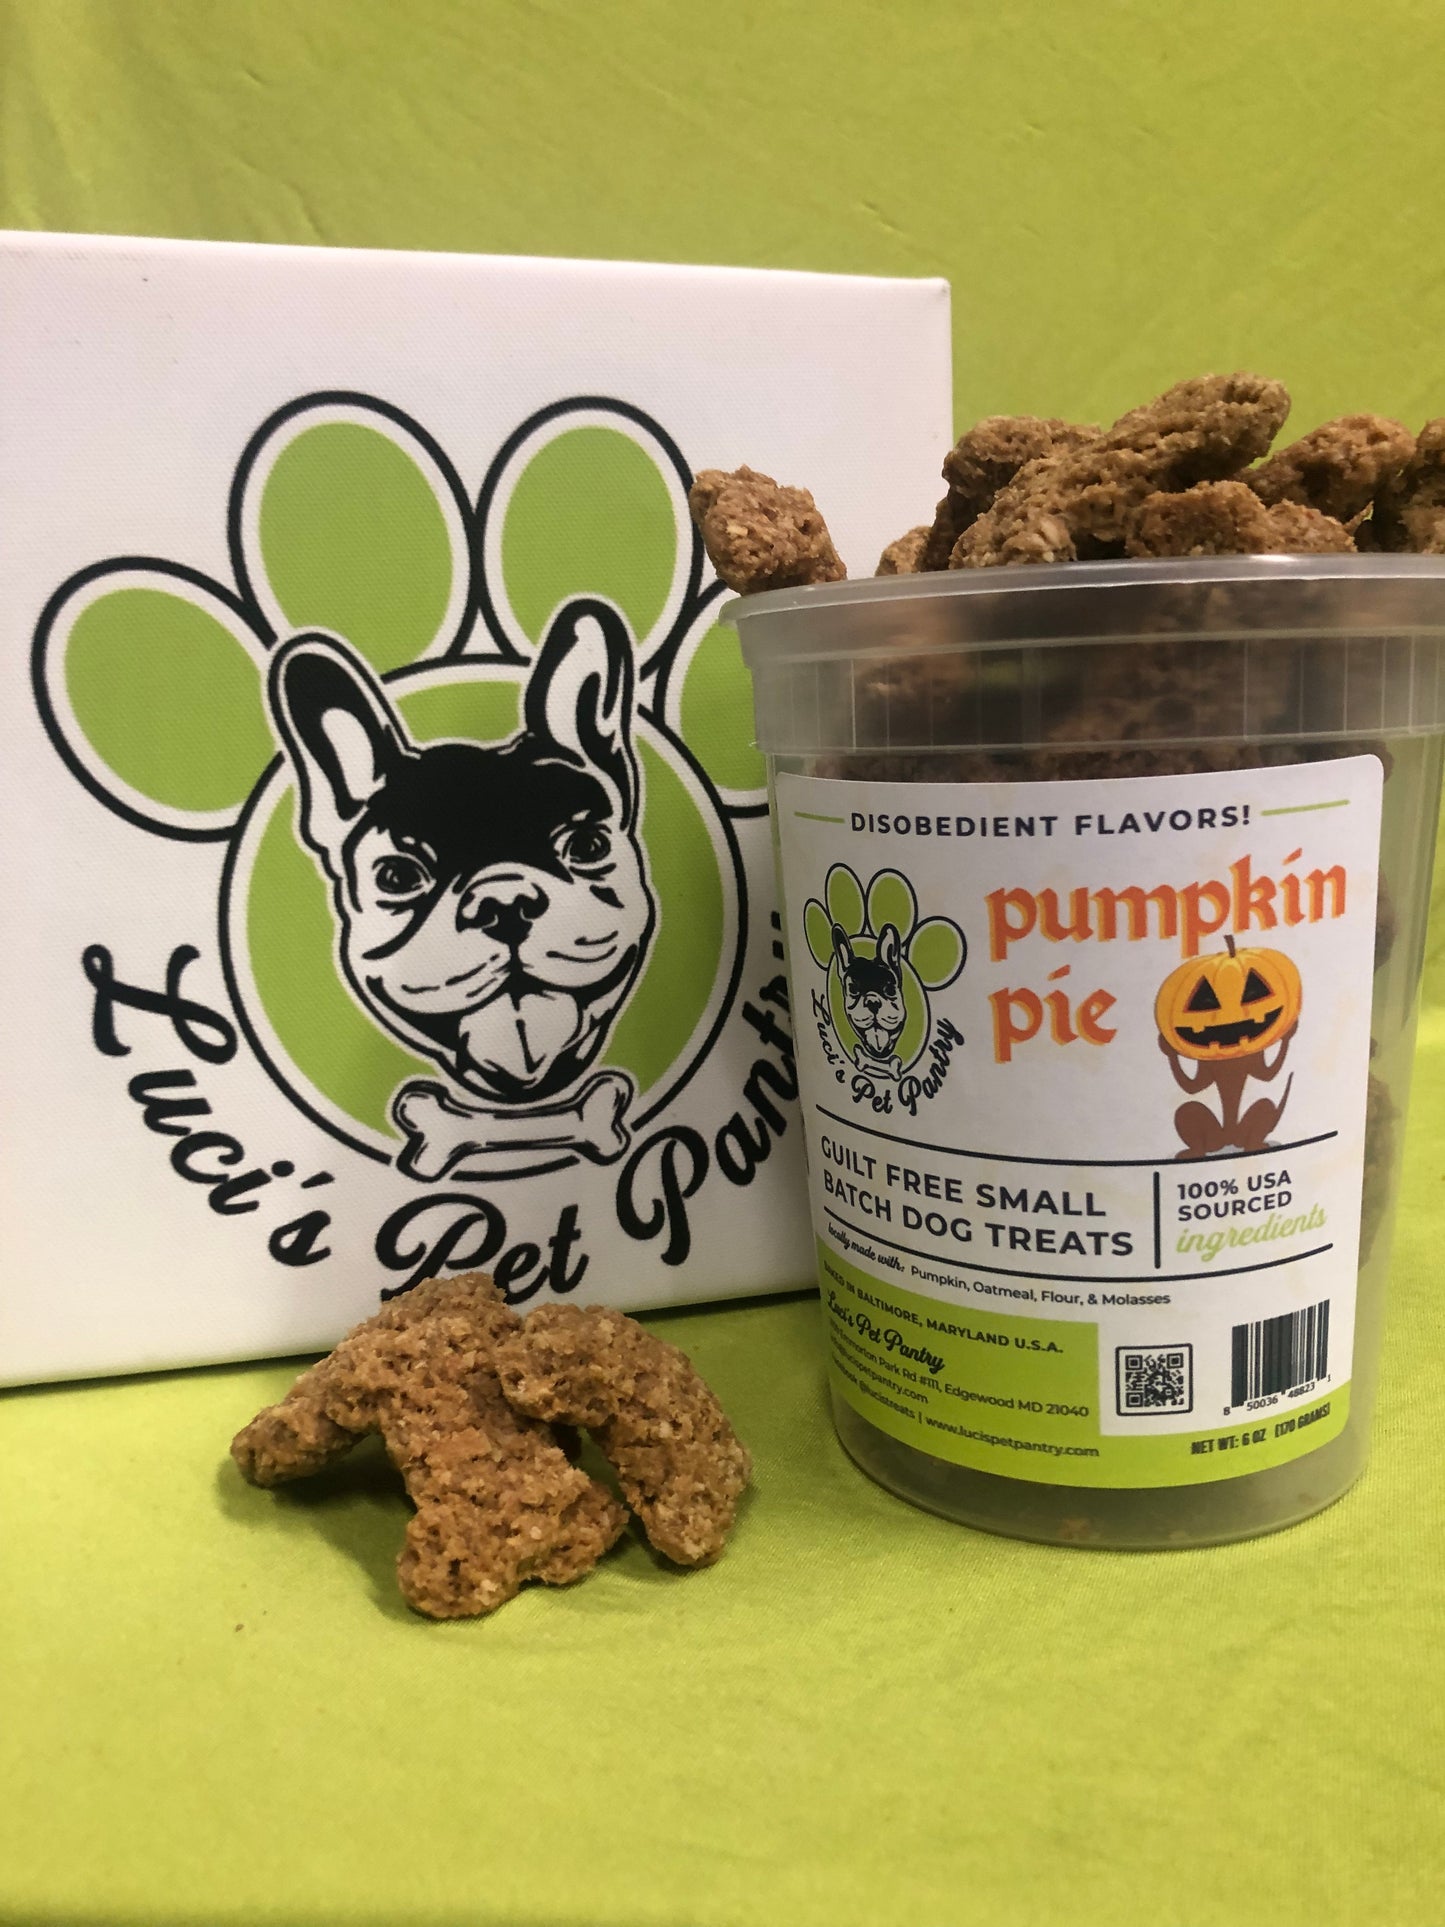 Pumpkin Pie - All Natural "Pumpkin" Dog & Puppy Treats - Disobedient Tub of Biscuits